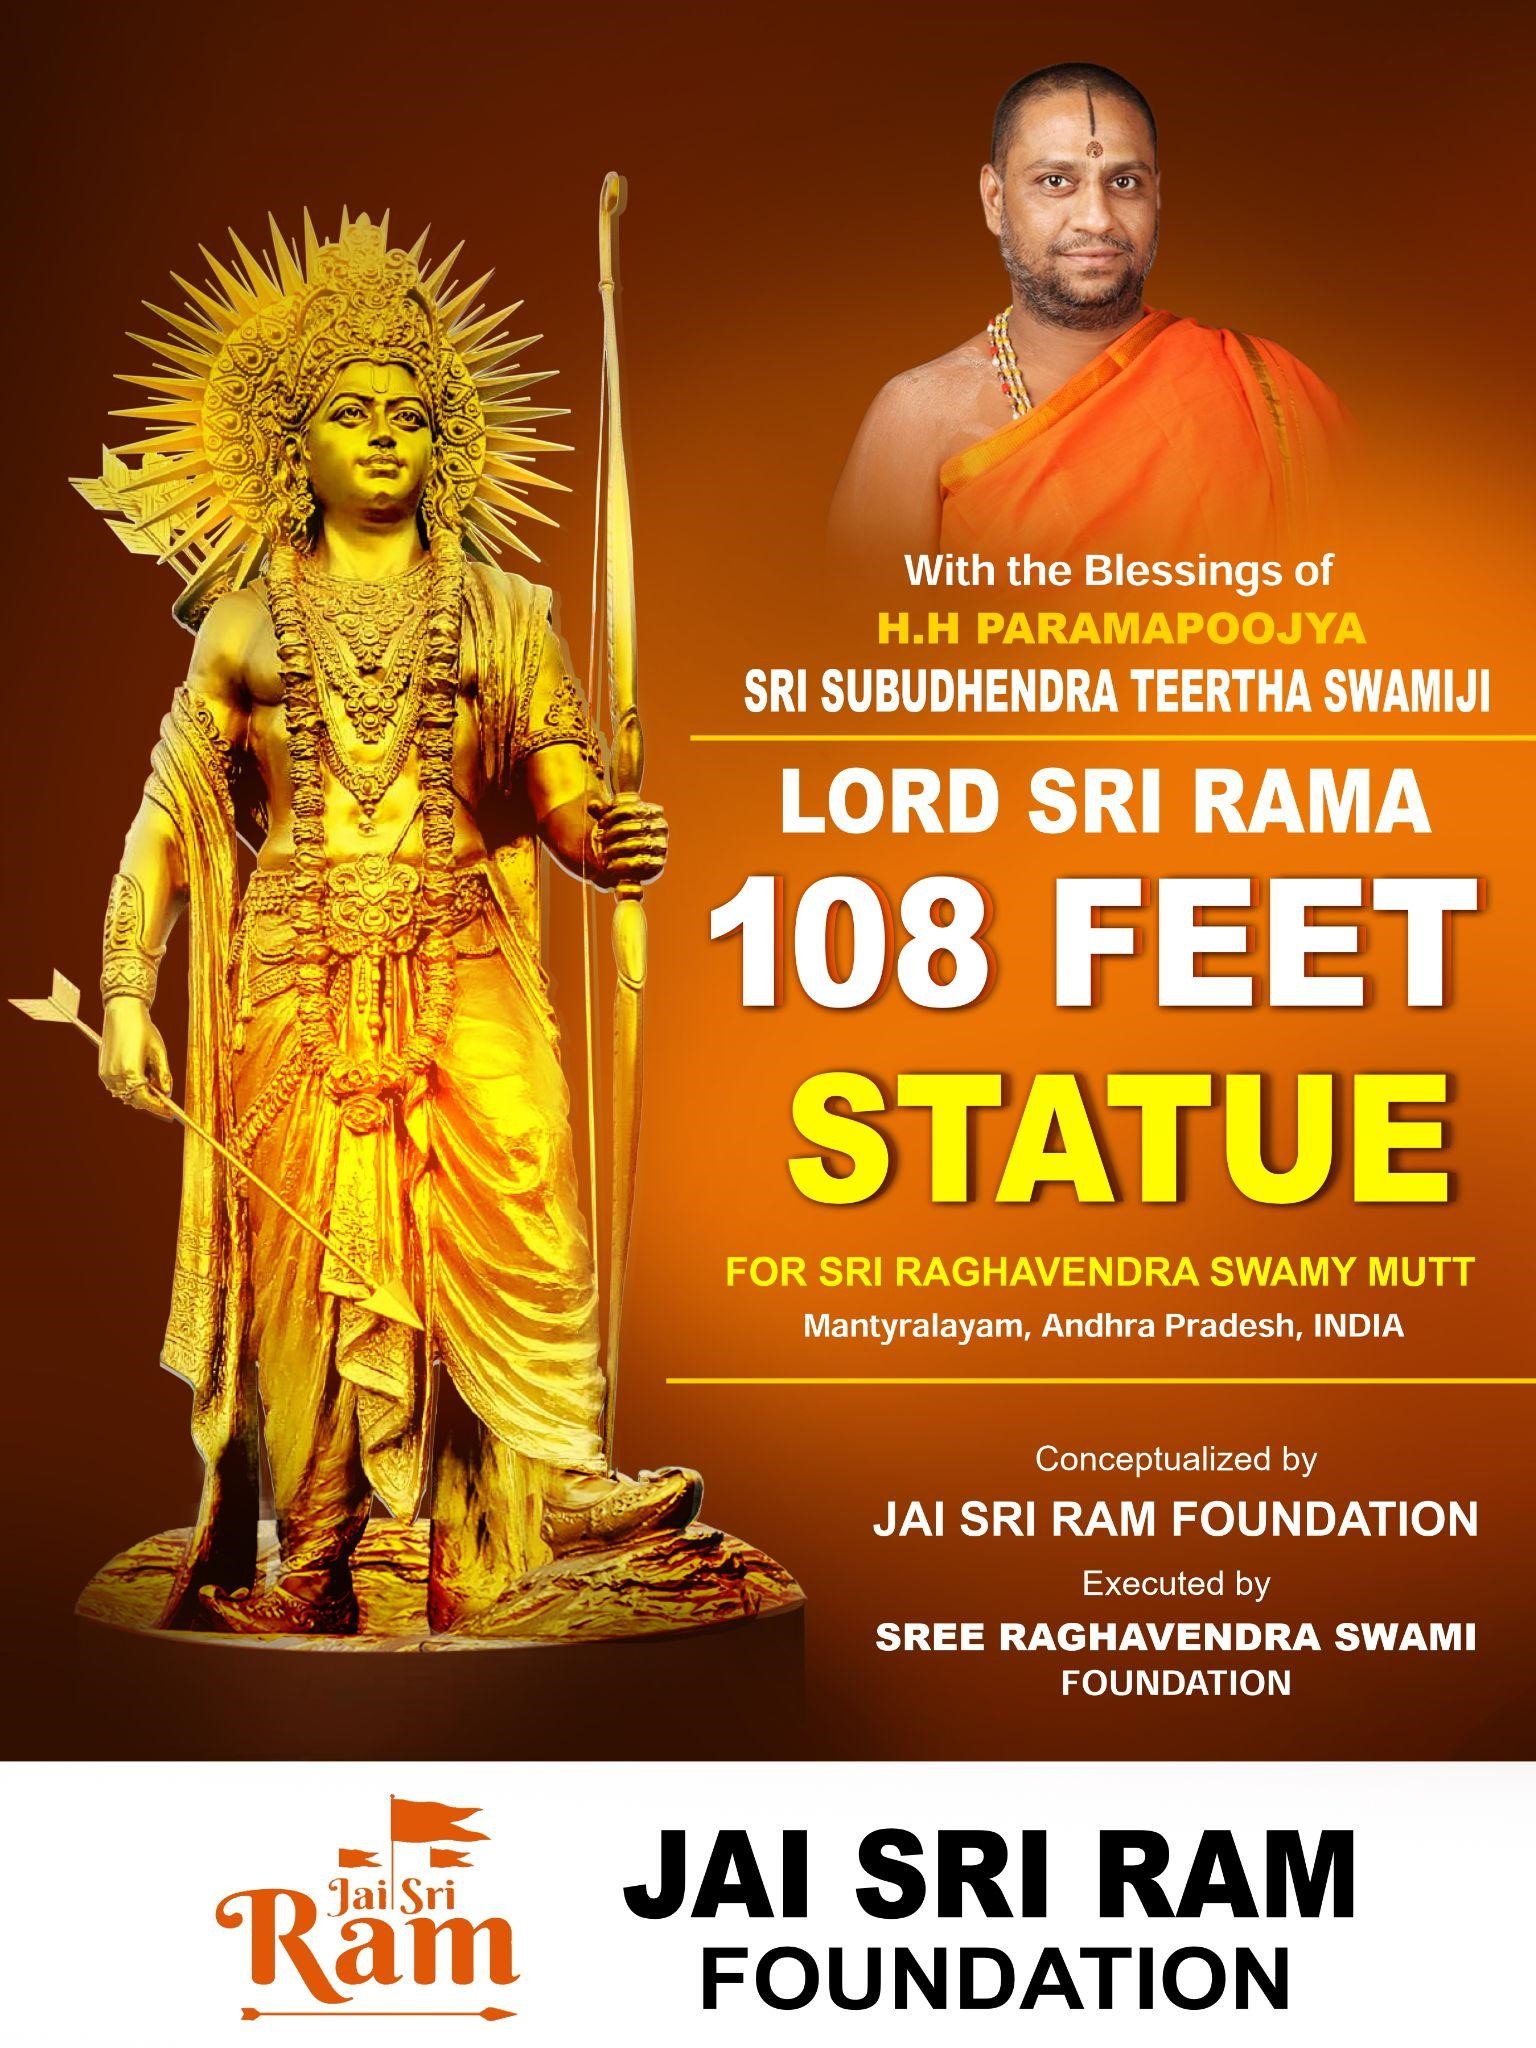 Jai Sri Ram Foundation Unveils Grand Vision: Majestic 108 Feet Lord Sri Rama Statue Takes Shape in Andhra Pradesh